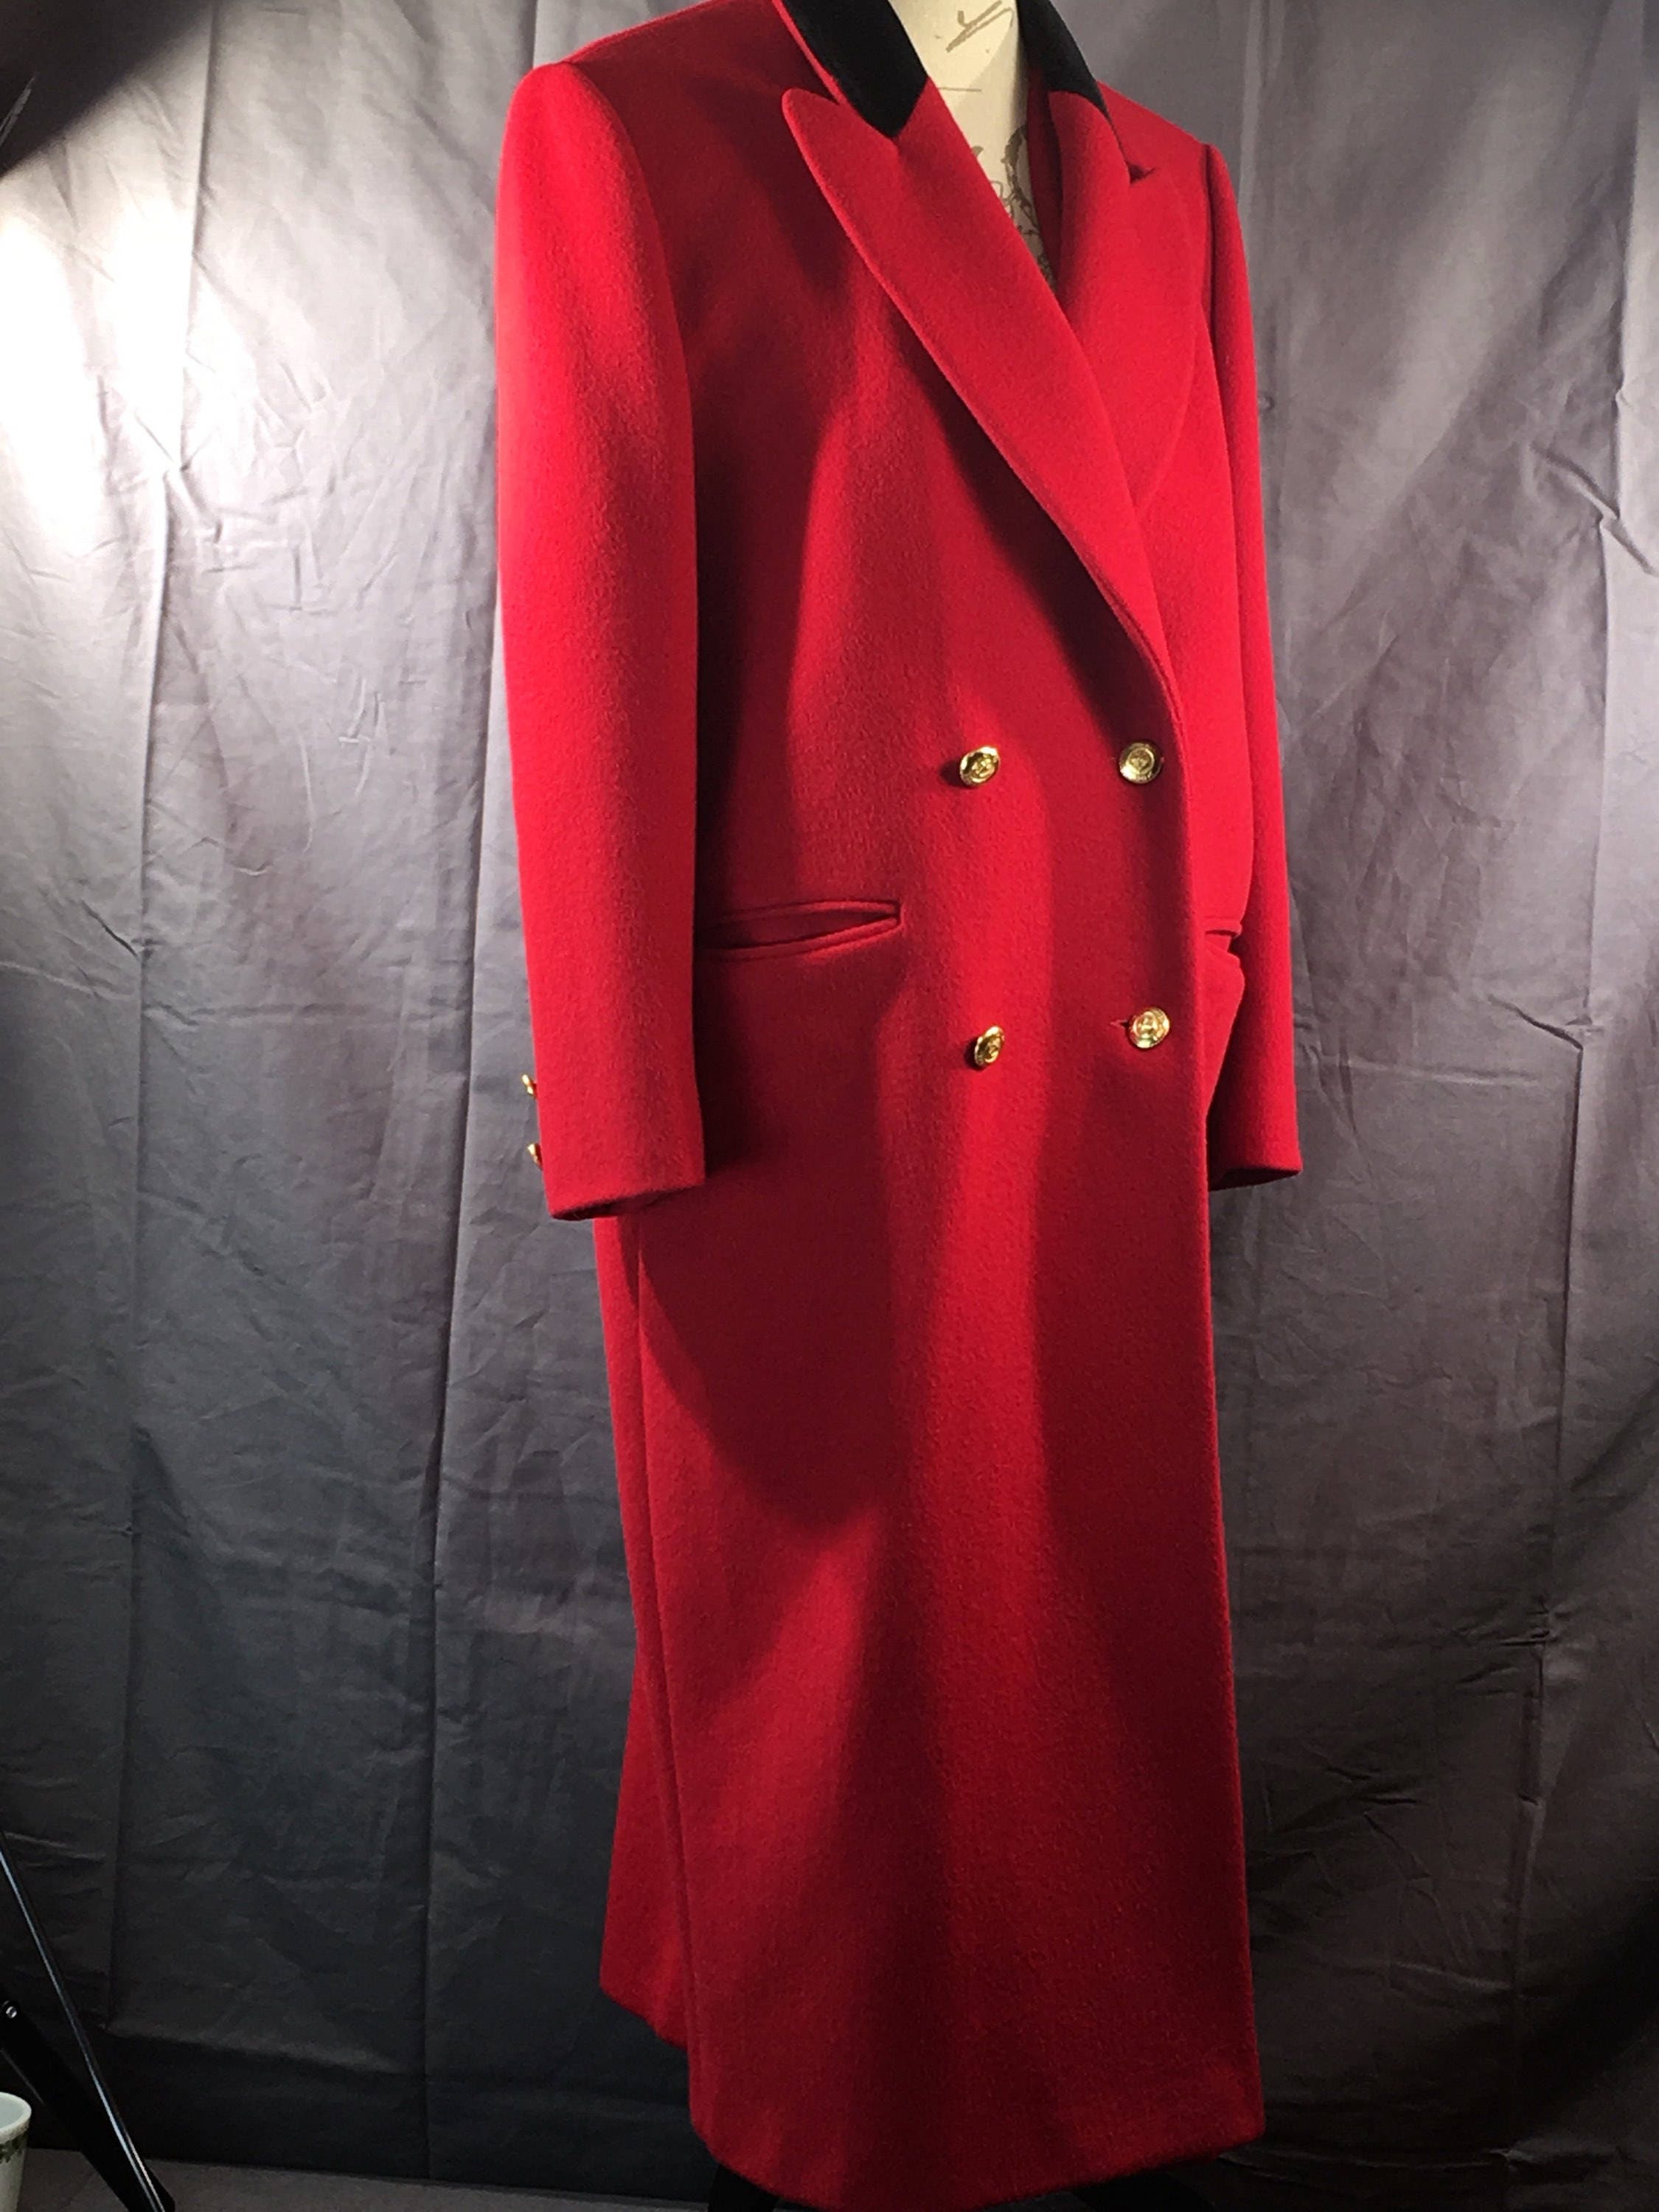 Vintage JG Hook Wool Coat, Designer Red Trench Coat, Classy Evening ...